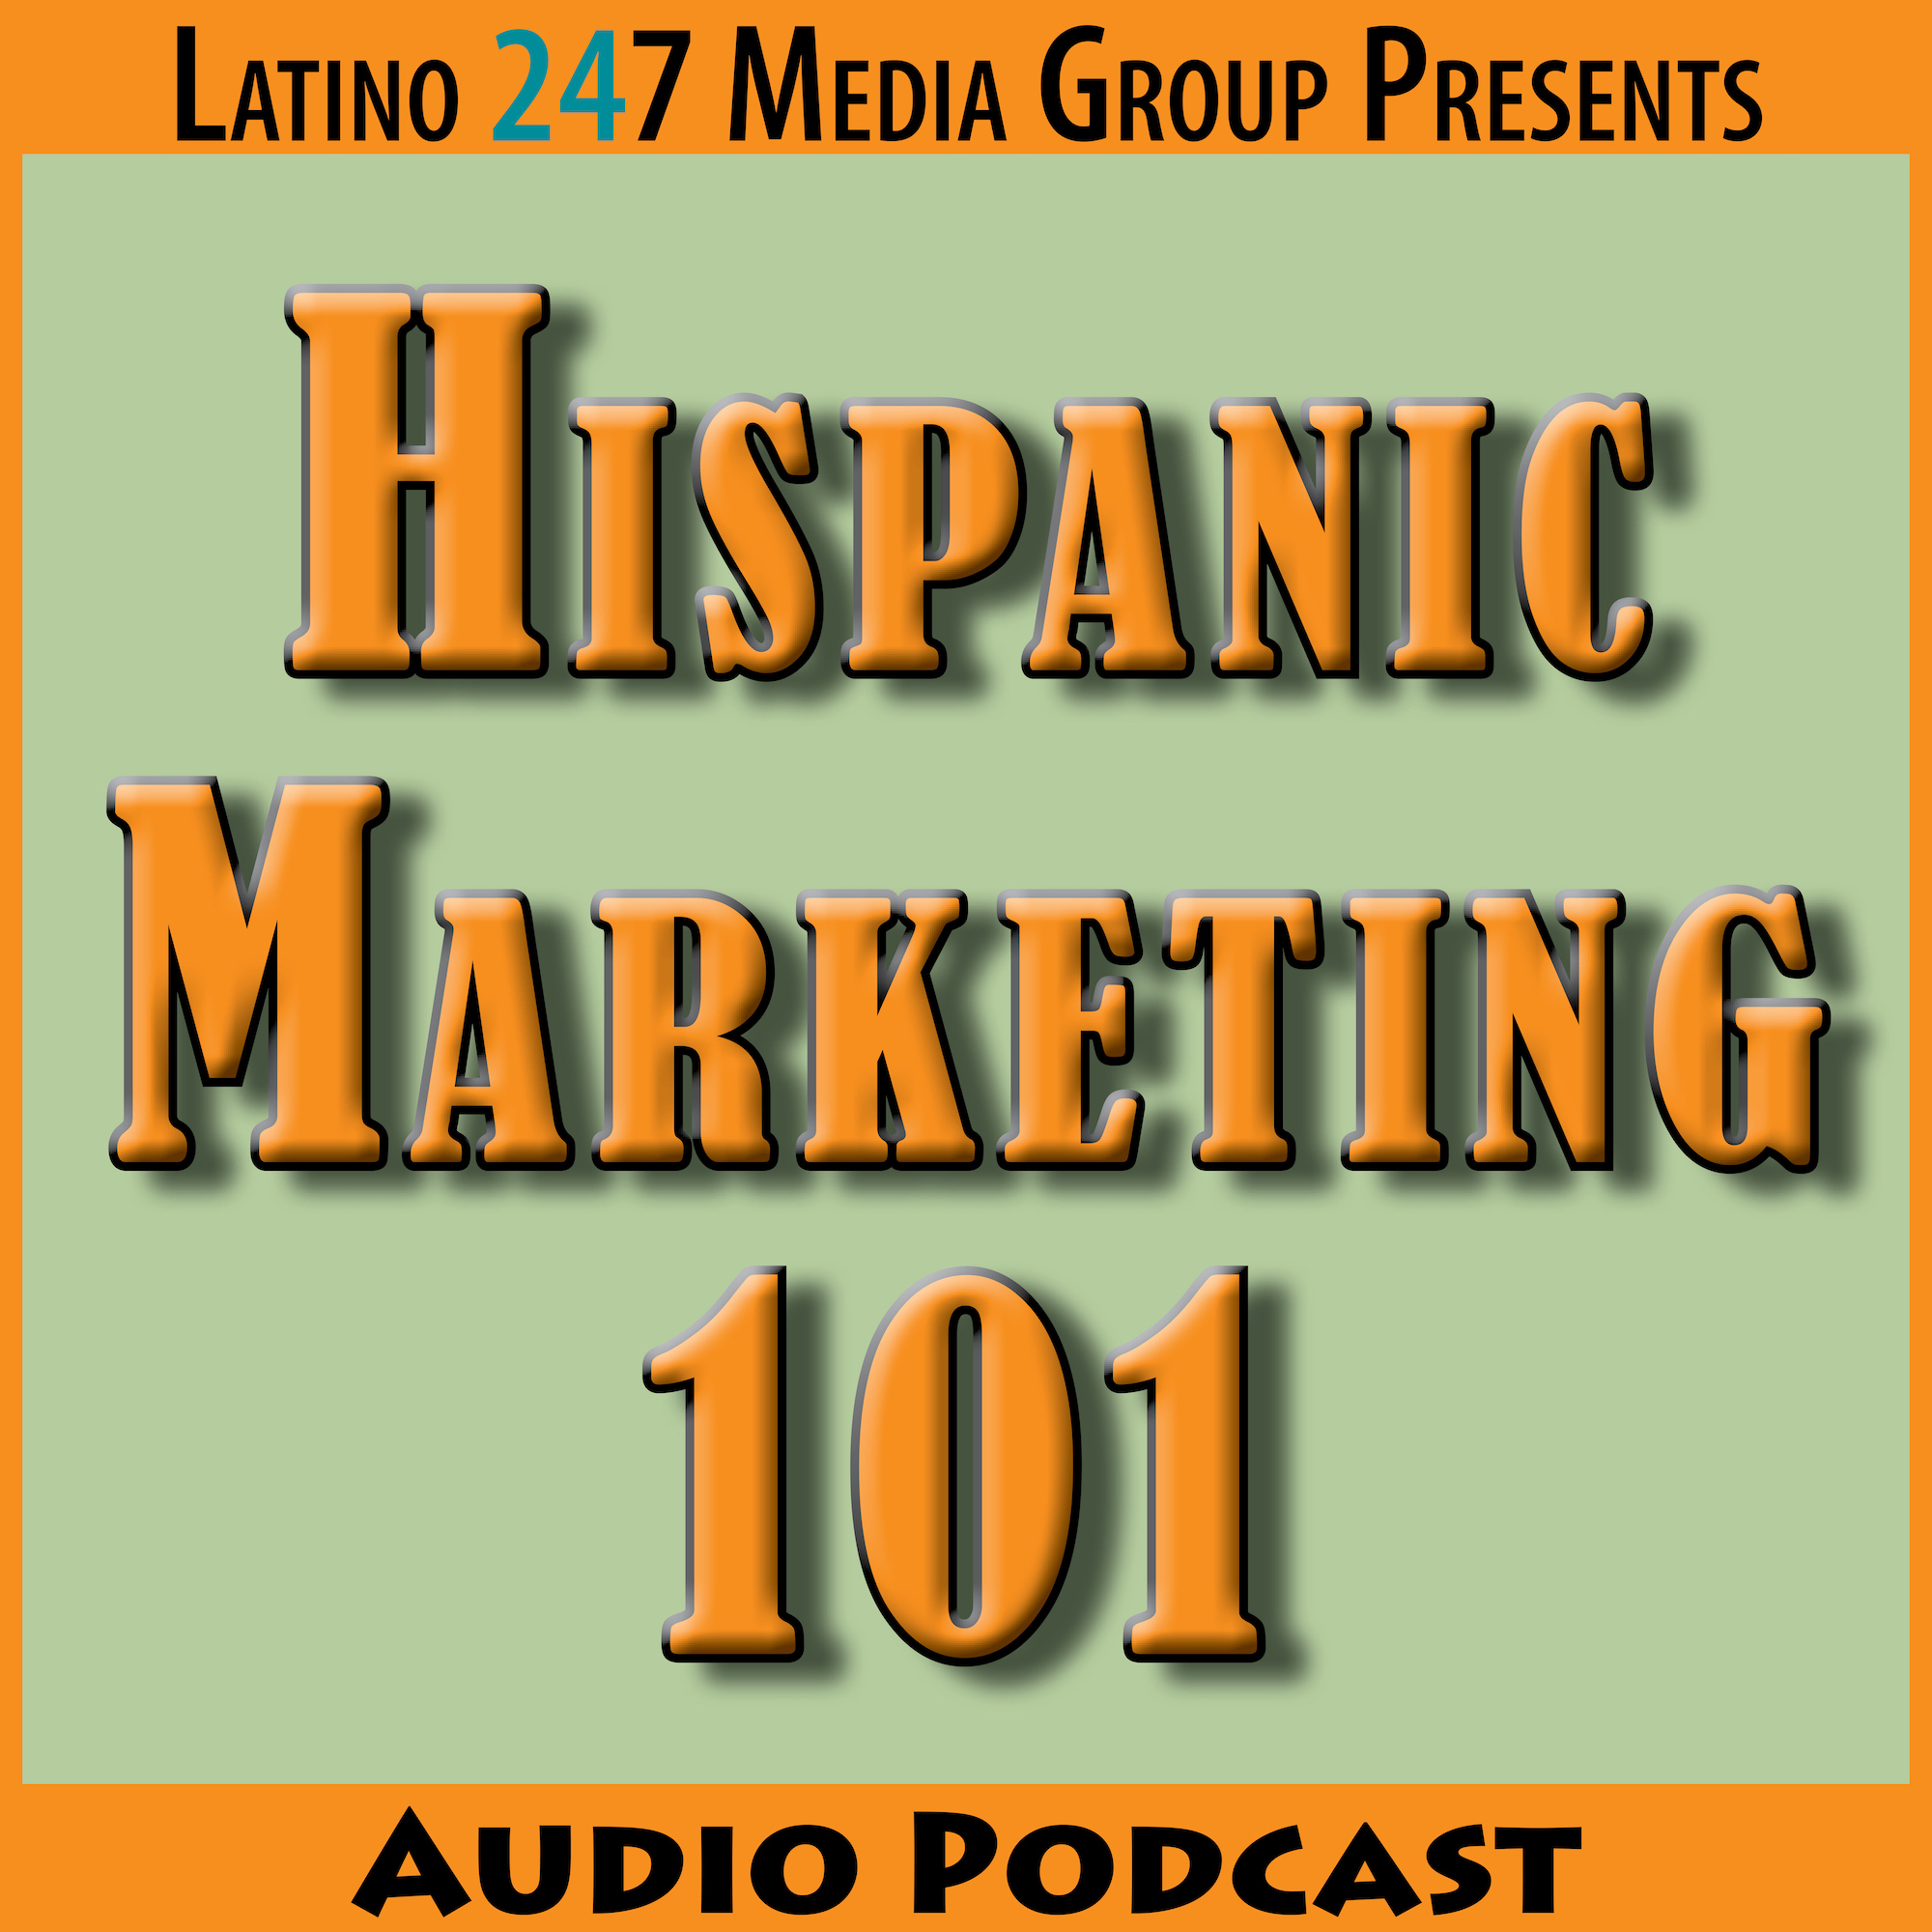 Introduction to Hispanic Marketing 101